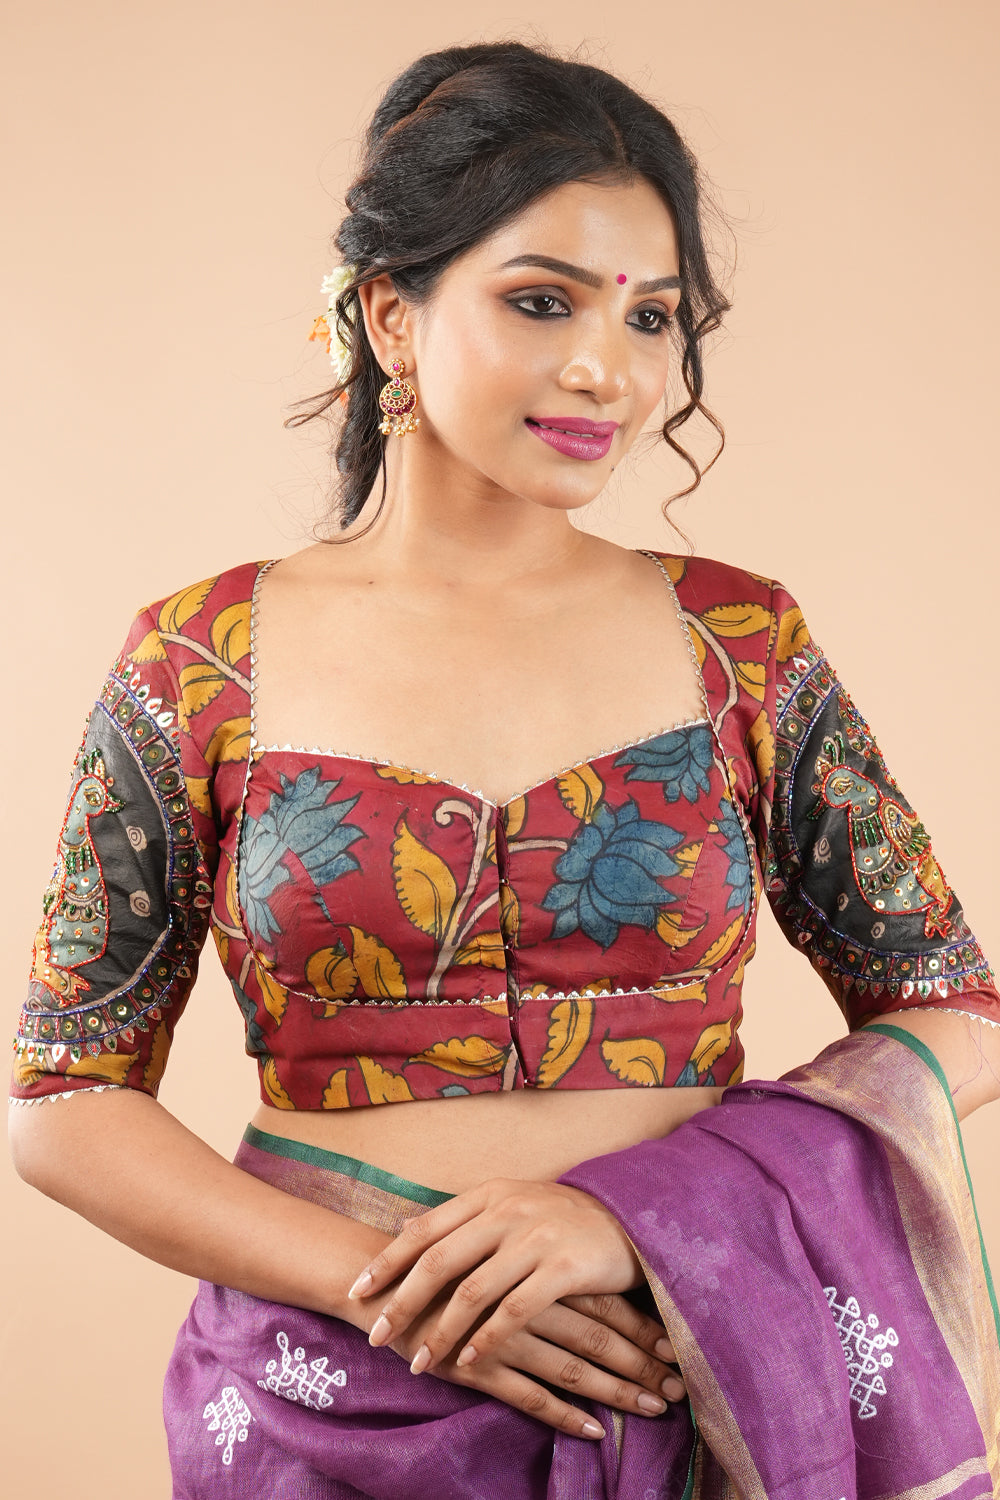 Red Kalamkari on silk blouse with sequin gotta and cutdana embelishments